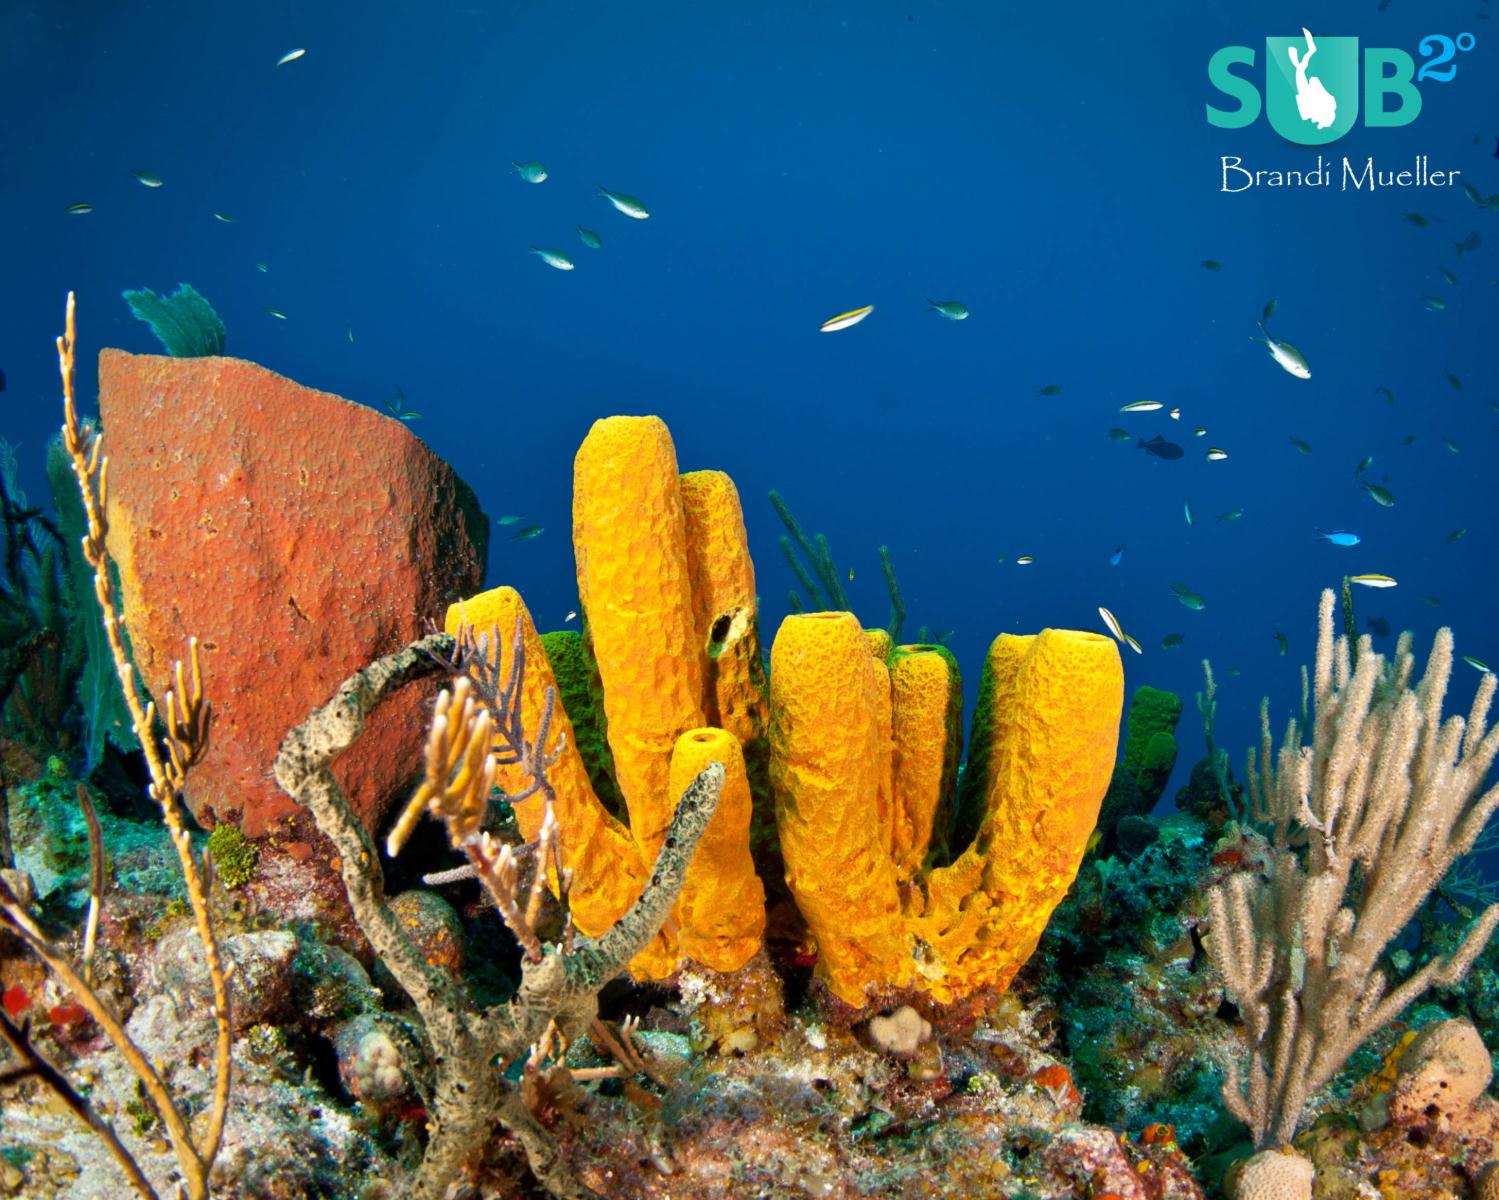 The Cayman Islands offer a Garden of Underwater Eden just offshore. 